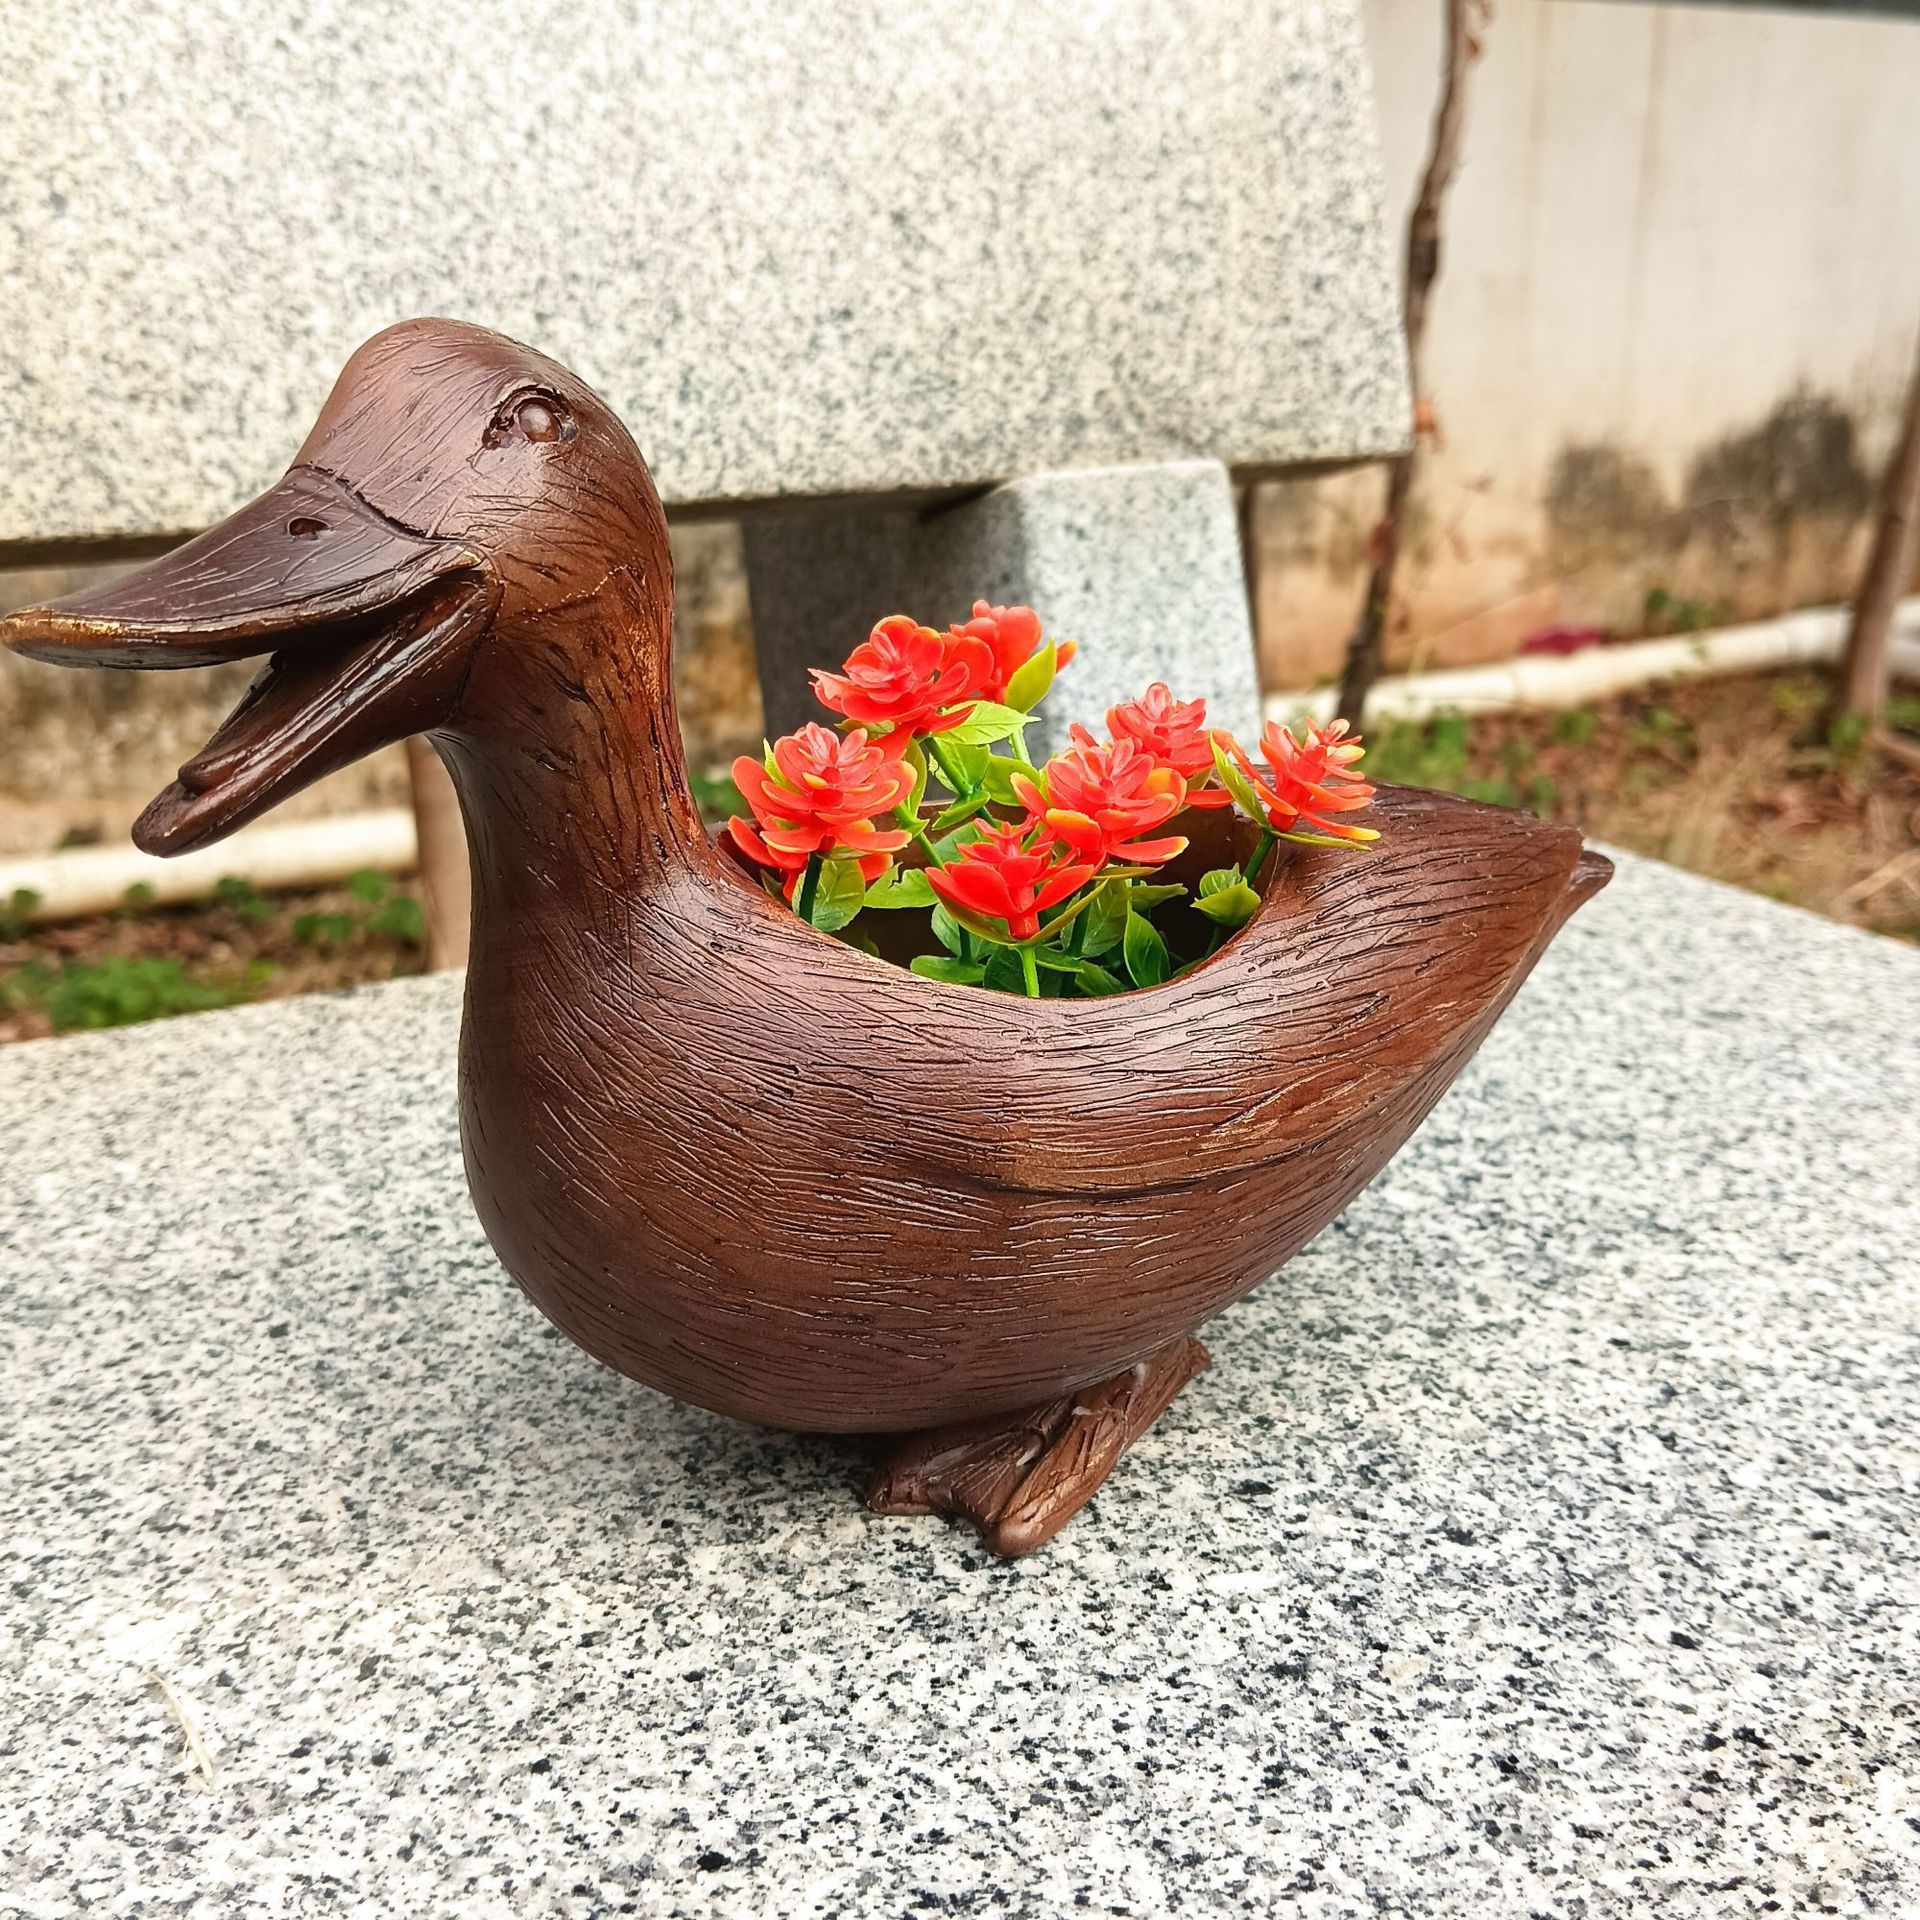 Resin Duck Shaped Planter - Decorative Animal Flower Pot for Succulents